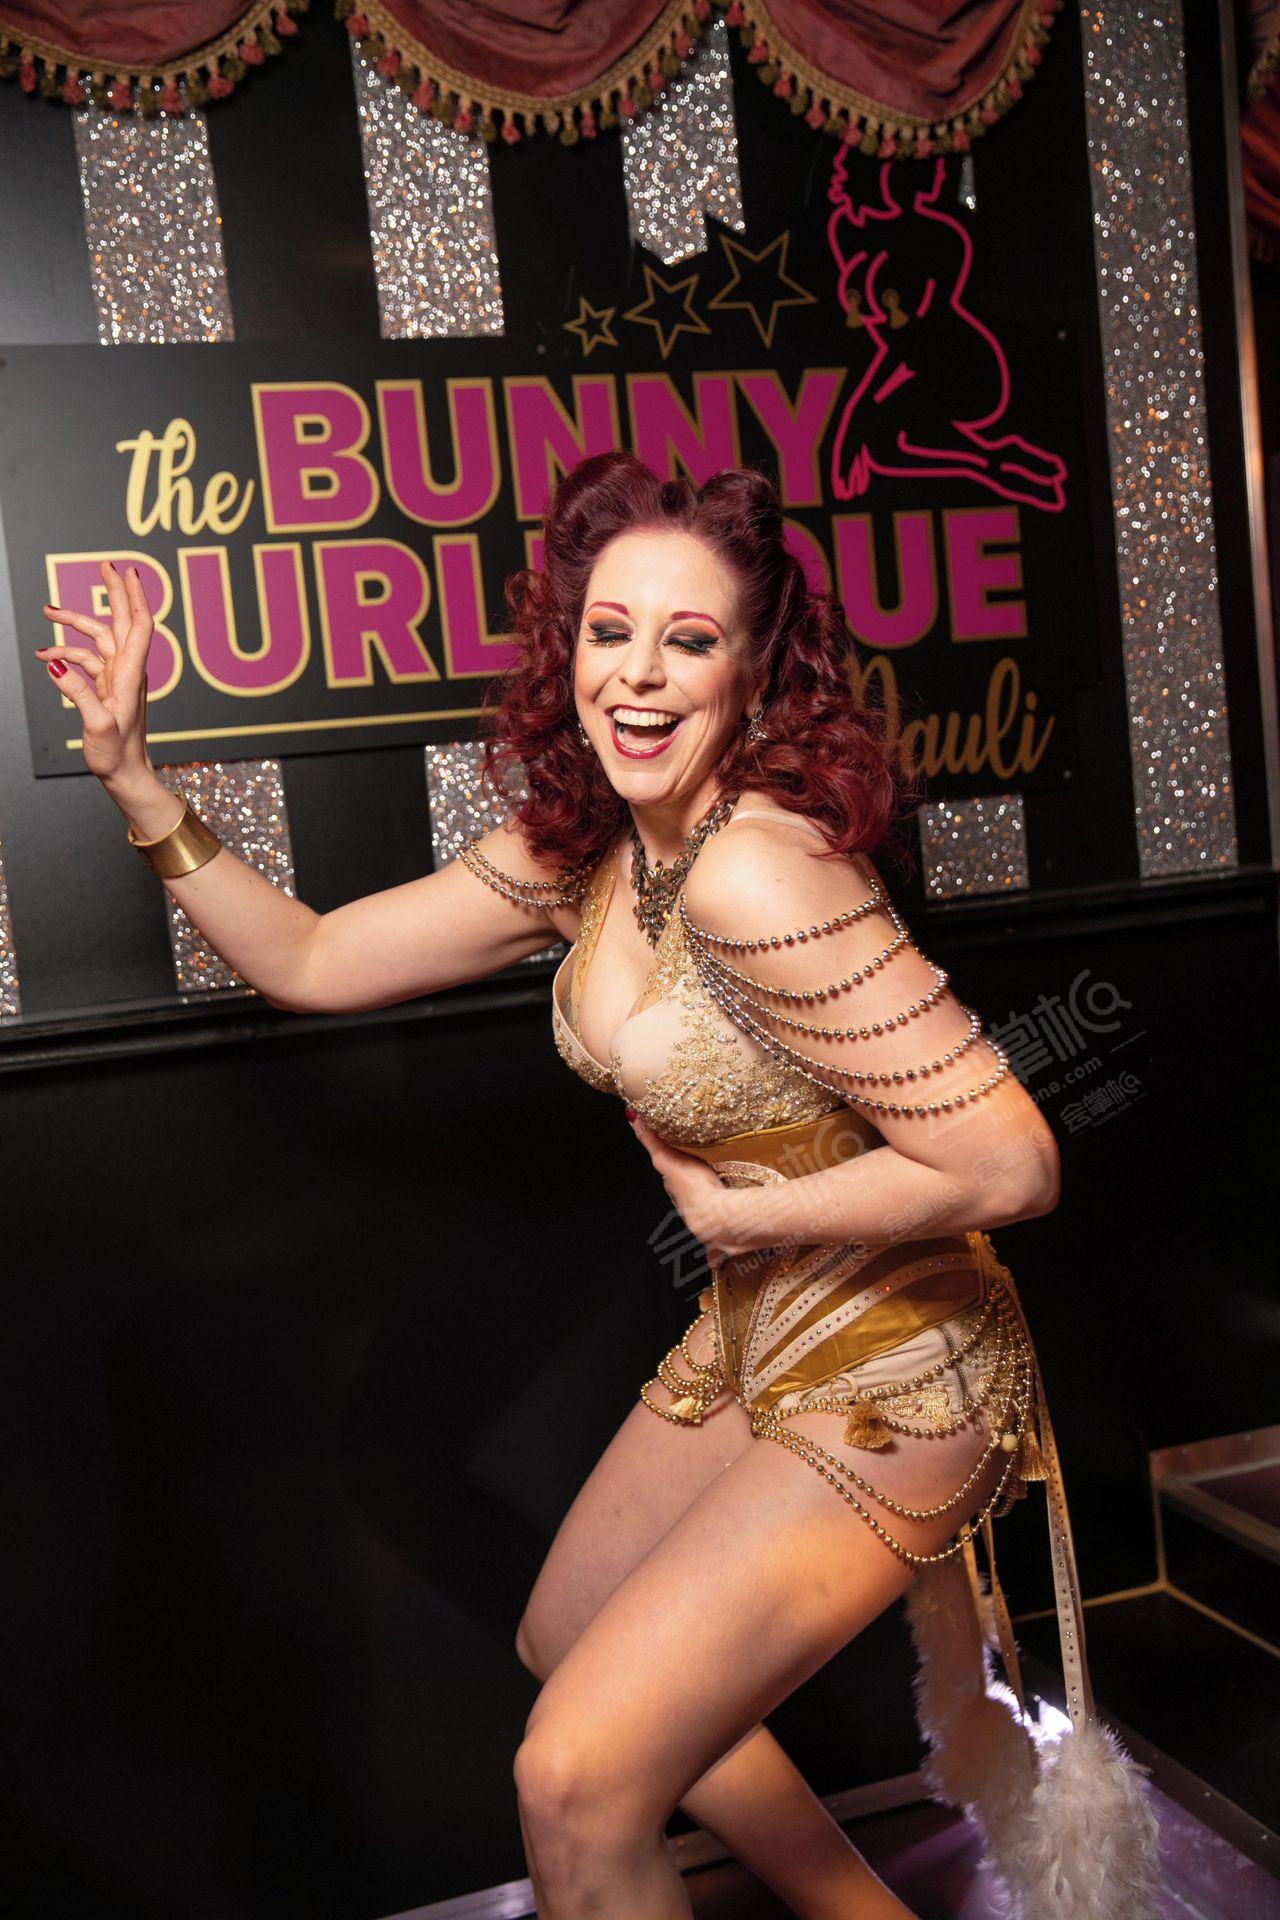 Bunny Burlesque